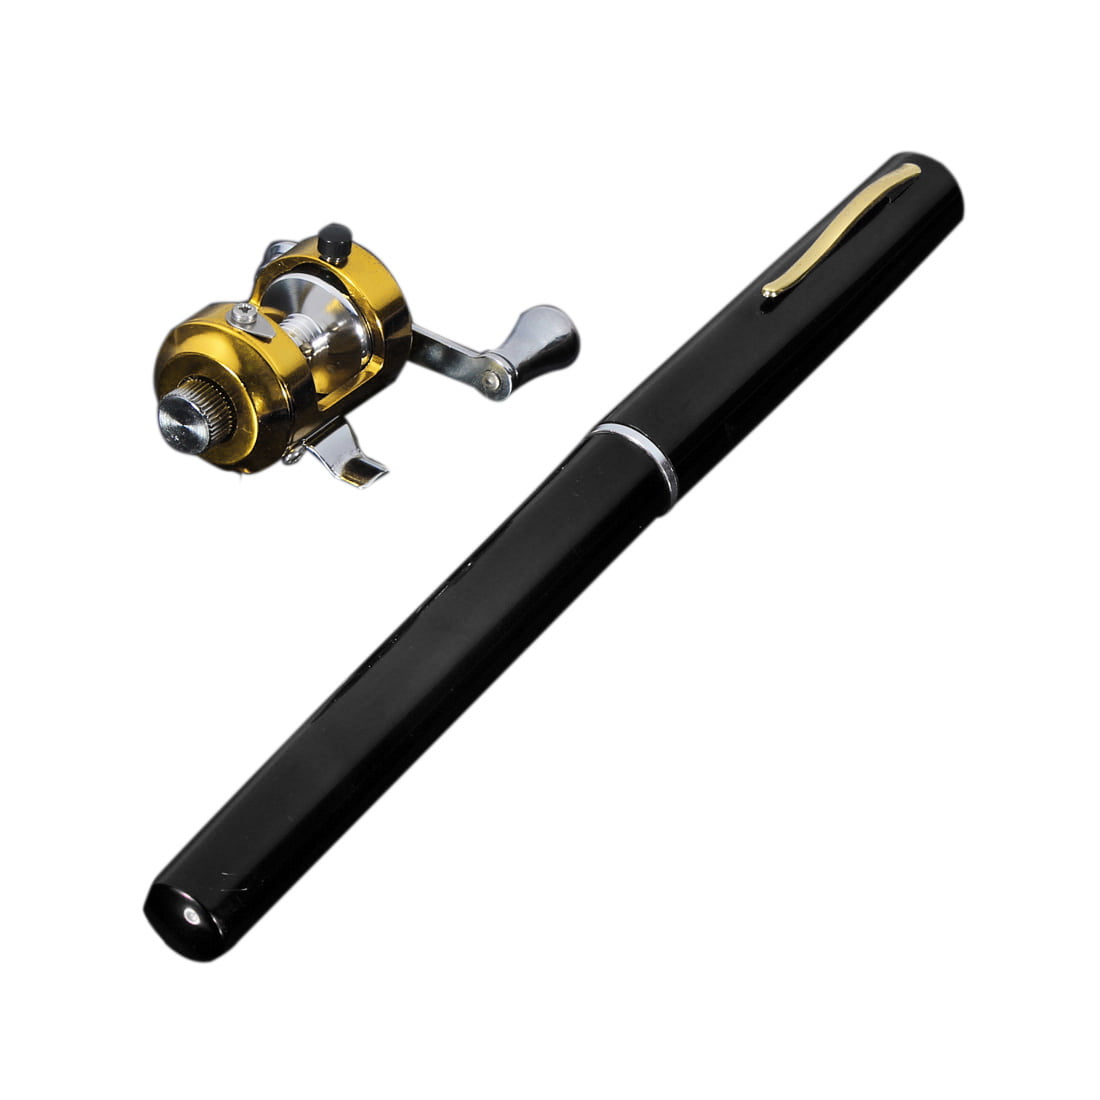 37.5 Pen Shape Fishing Pole Fishing Rod Aluminum Alloy Portable Pocket Fishing  Rod Pole + Reel Combos 6 Colors 